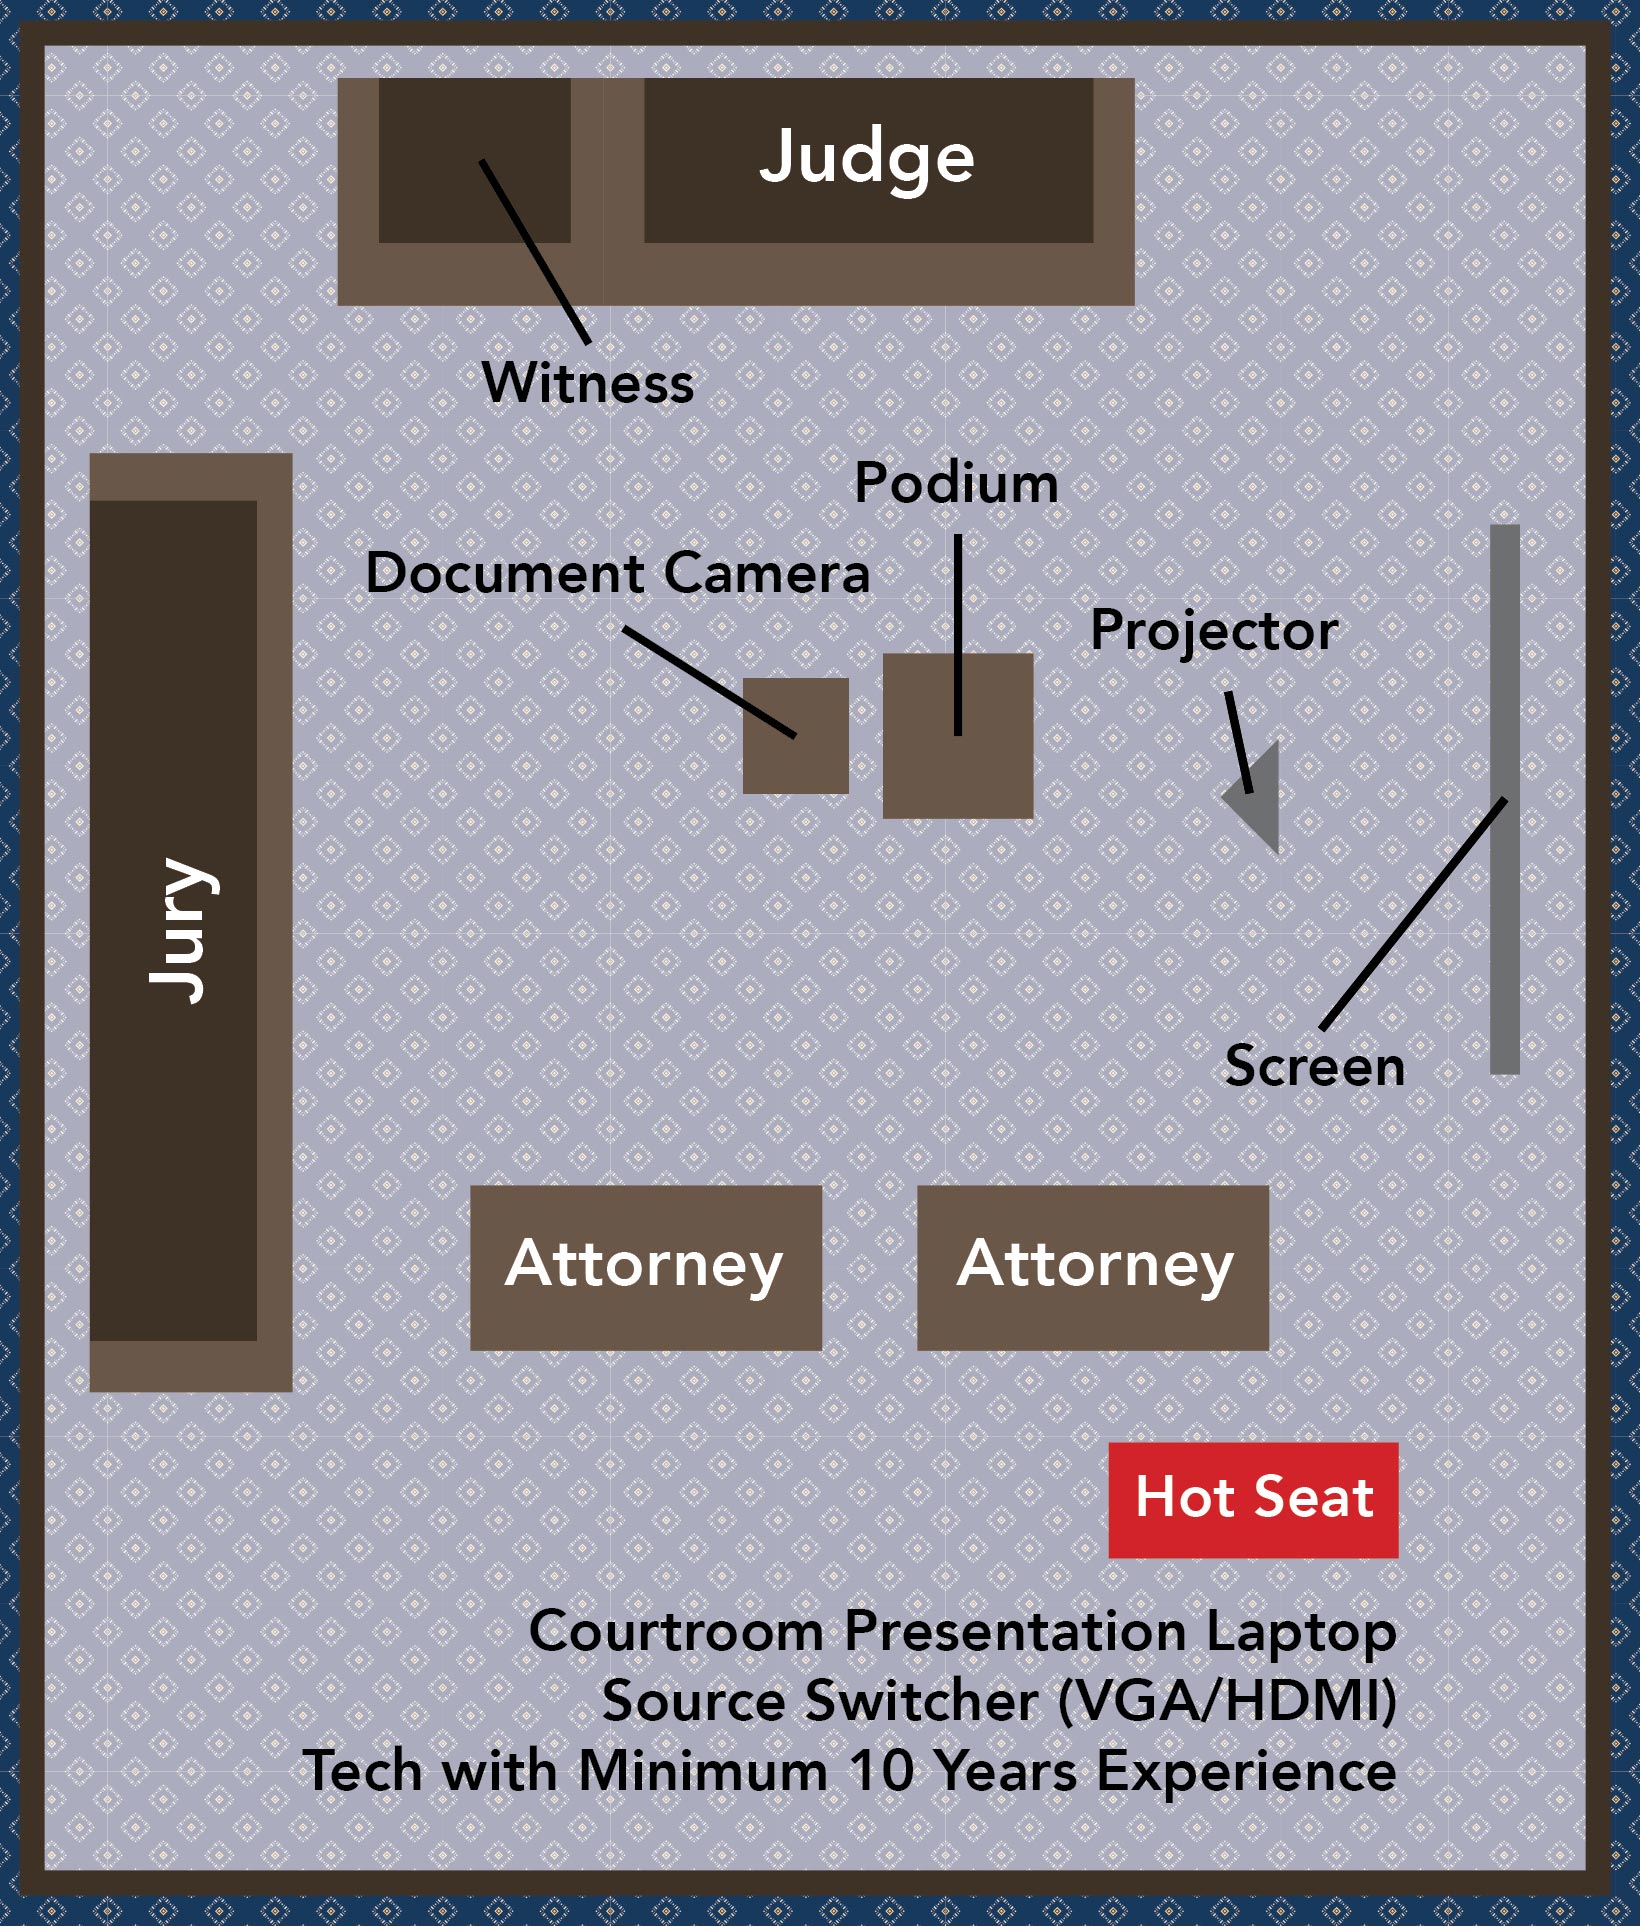 Courtroom Evidence Presentation System Schema